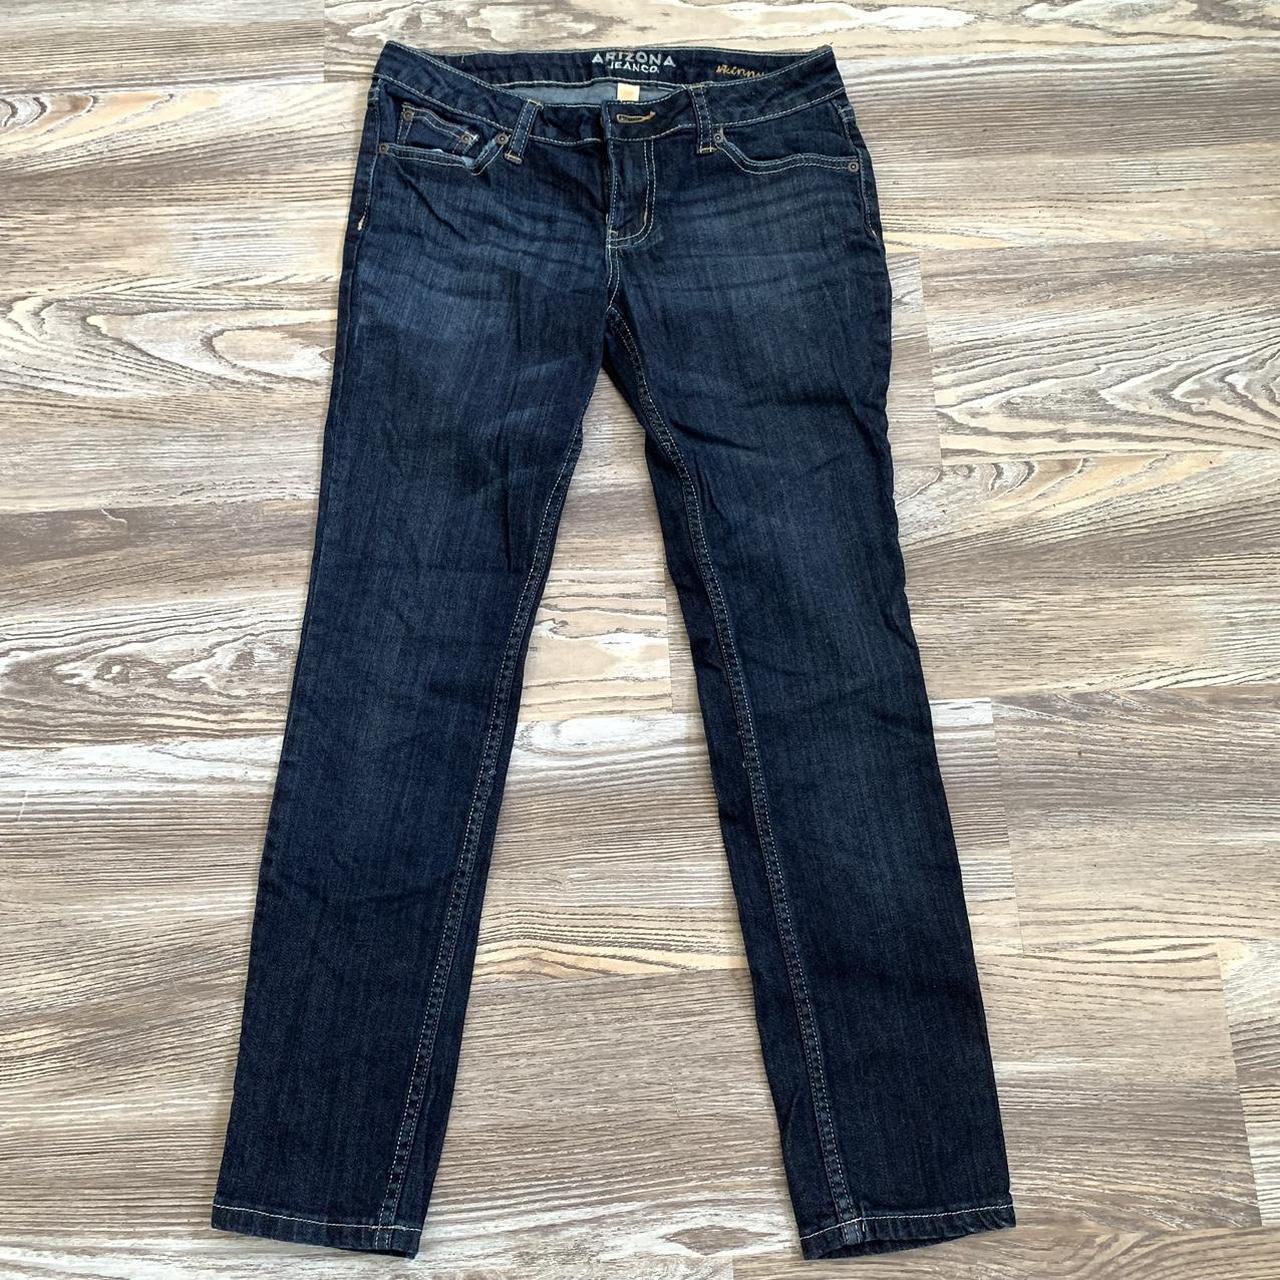 denim, short.... blue jeans! Arizona size Dark Depop - skinny 7